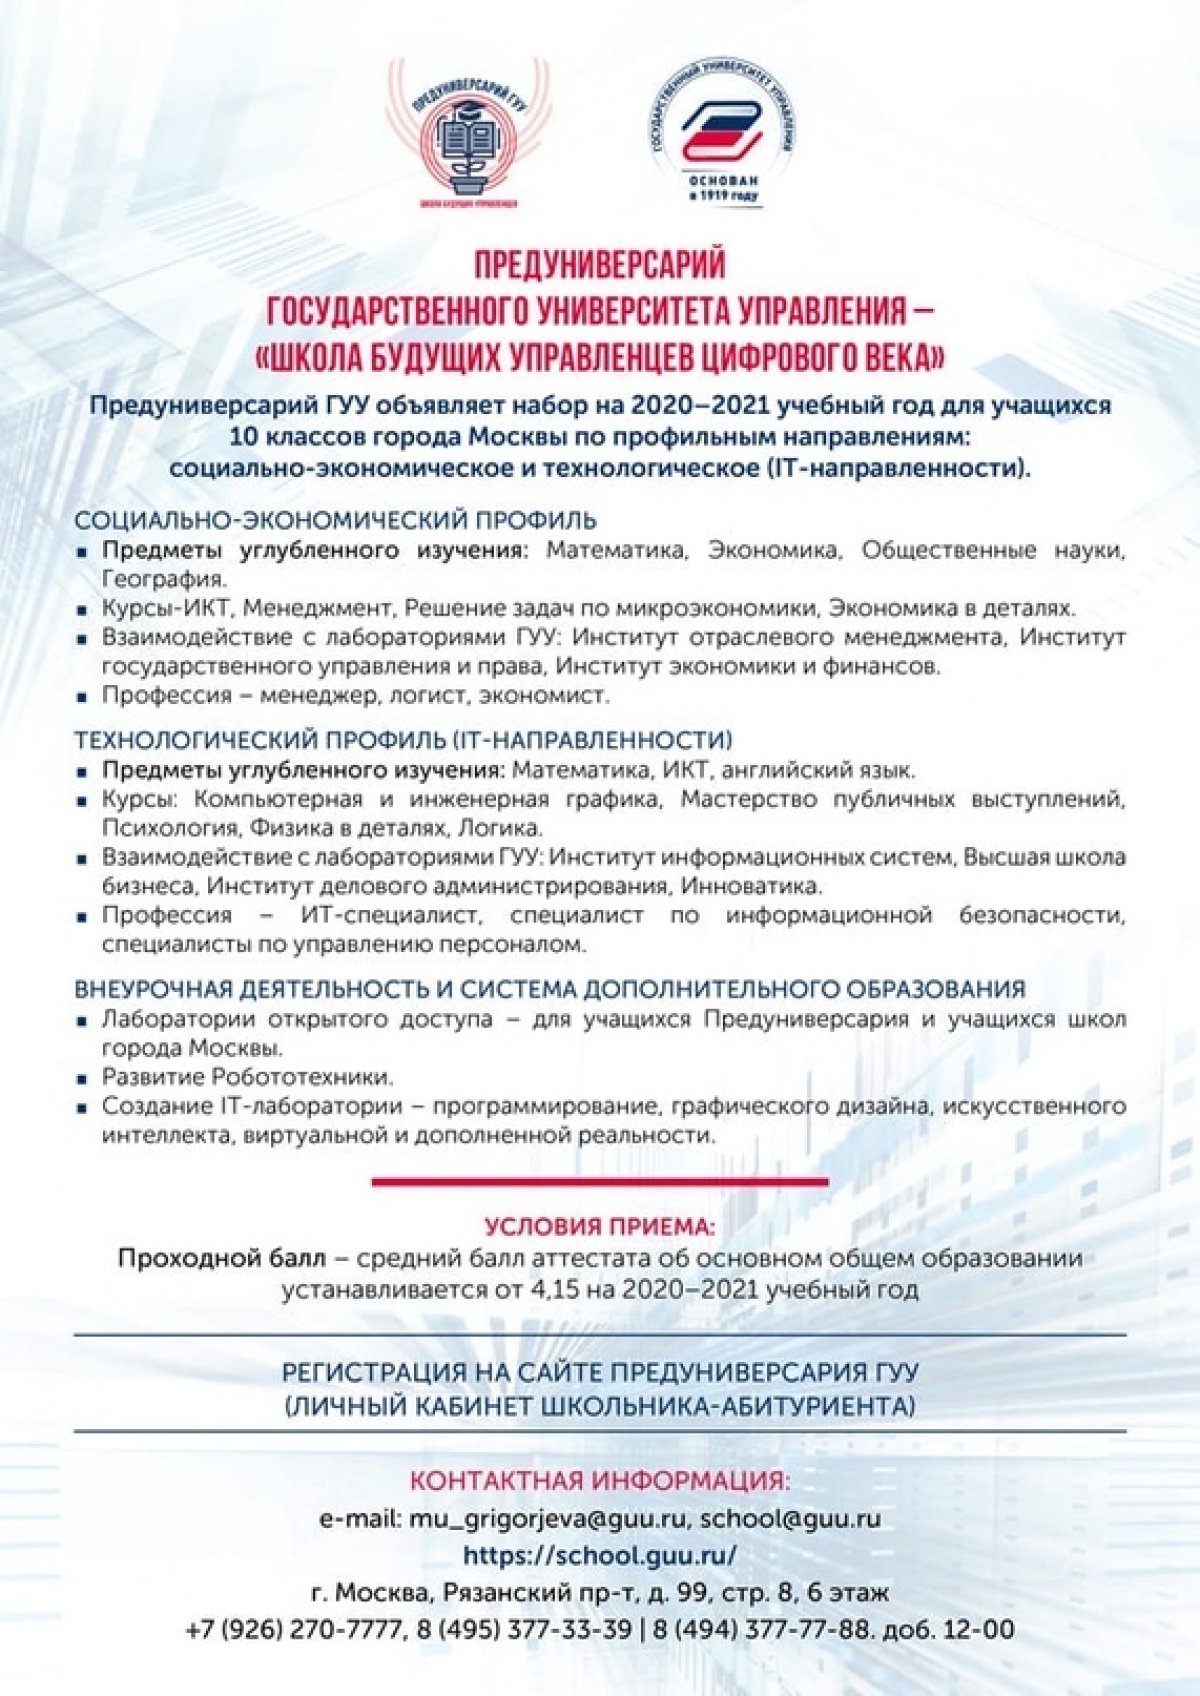 Предуниверсарий ГУУ - «Школа будущих управленцев цифрового века»